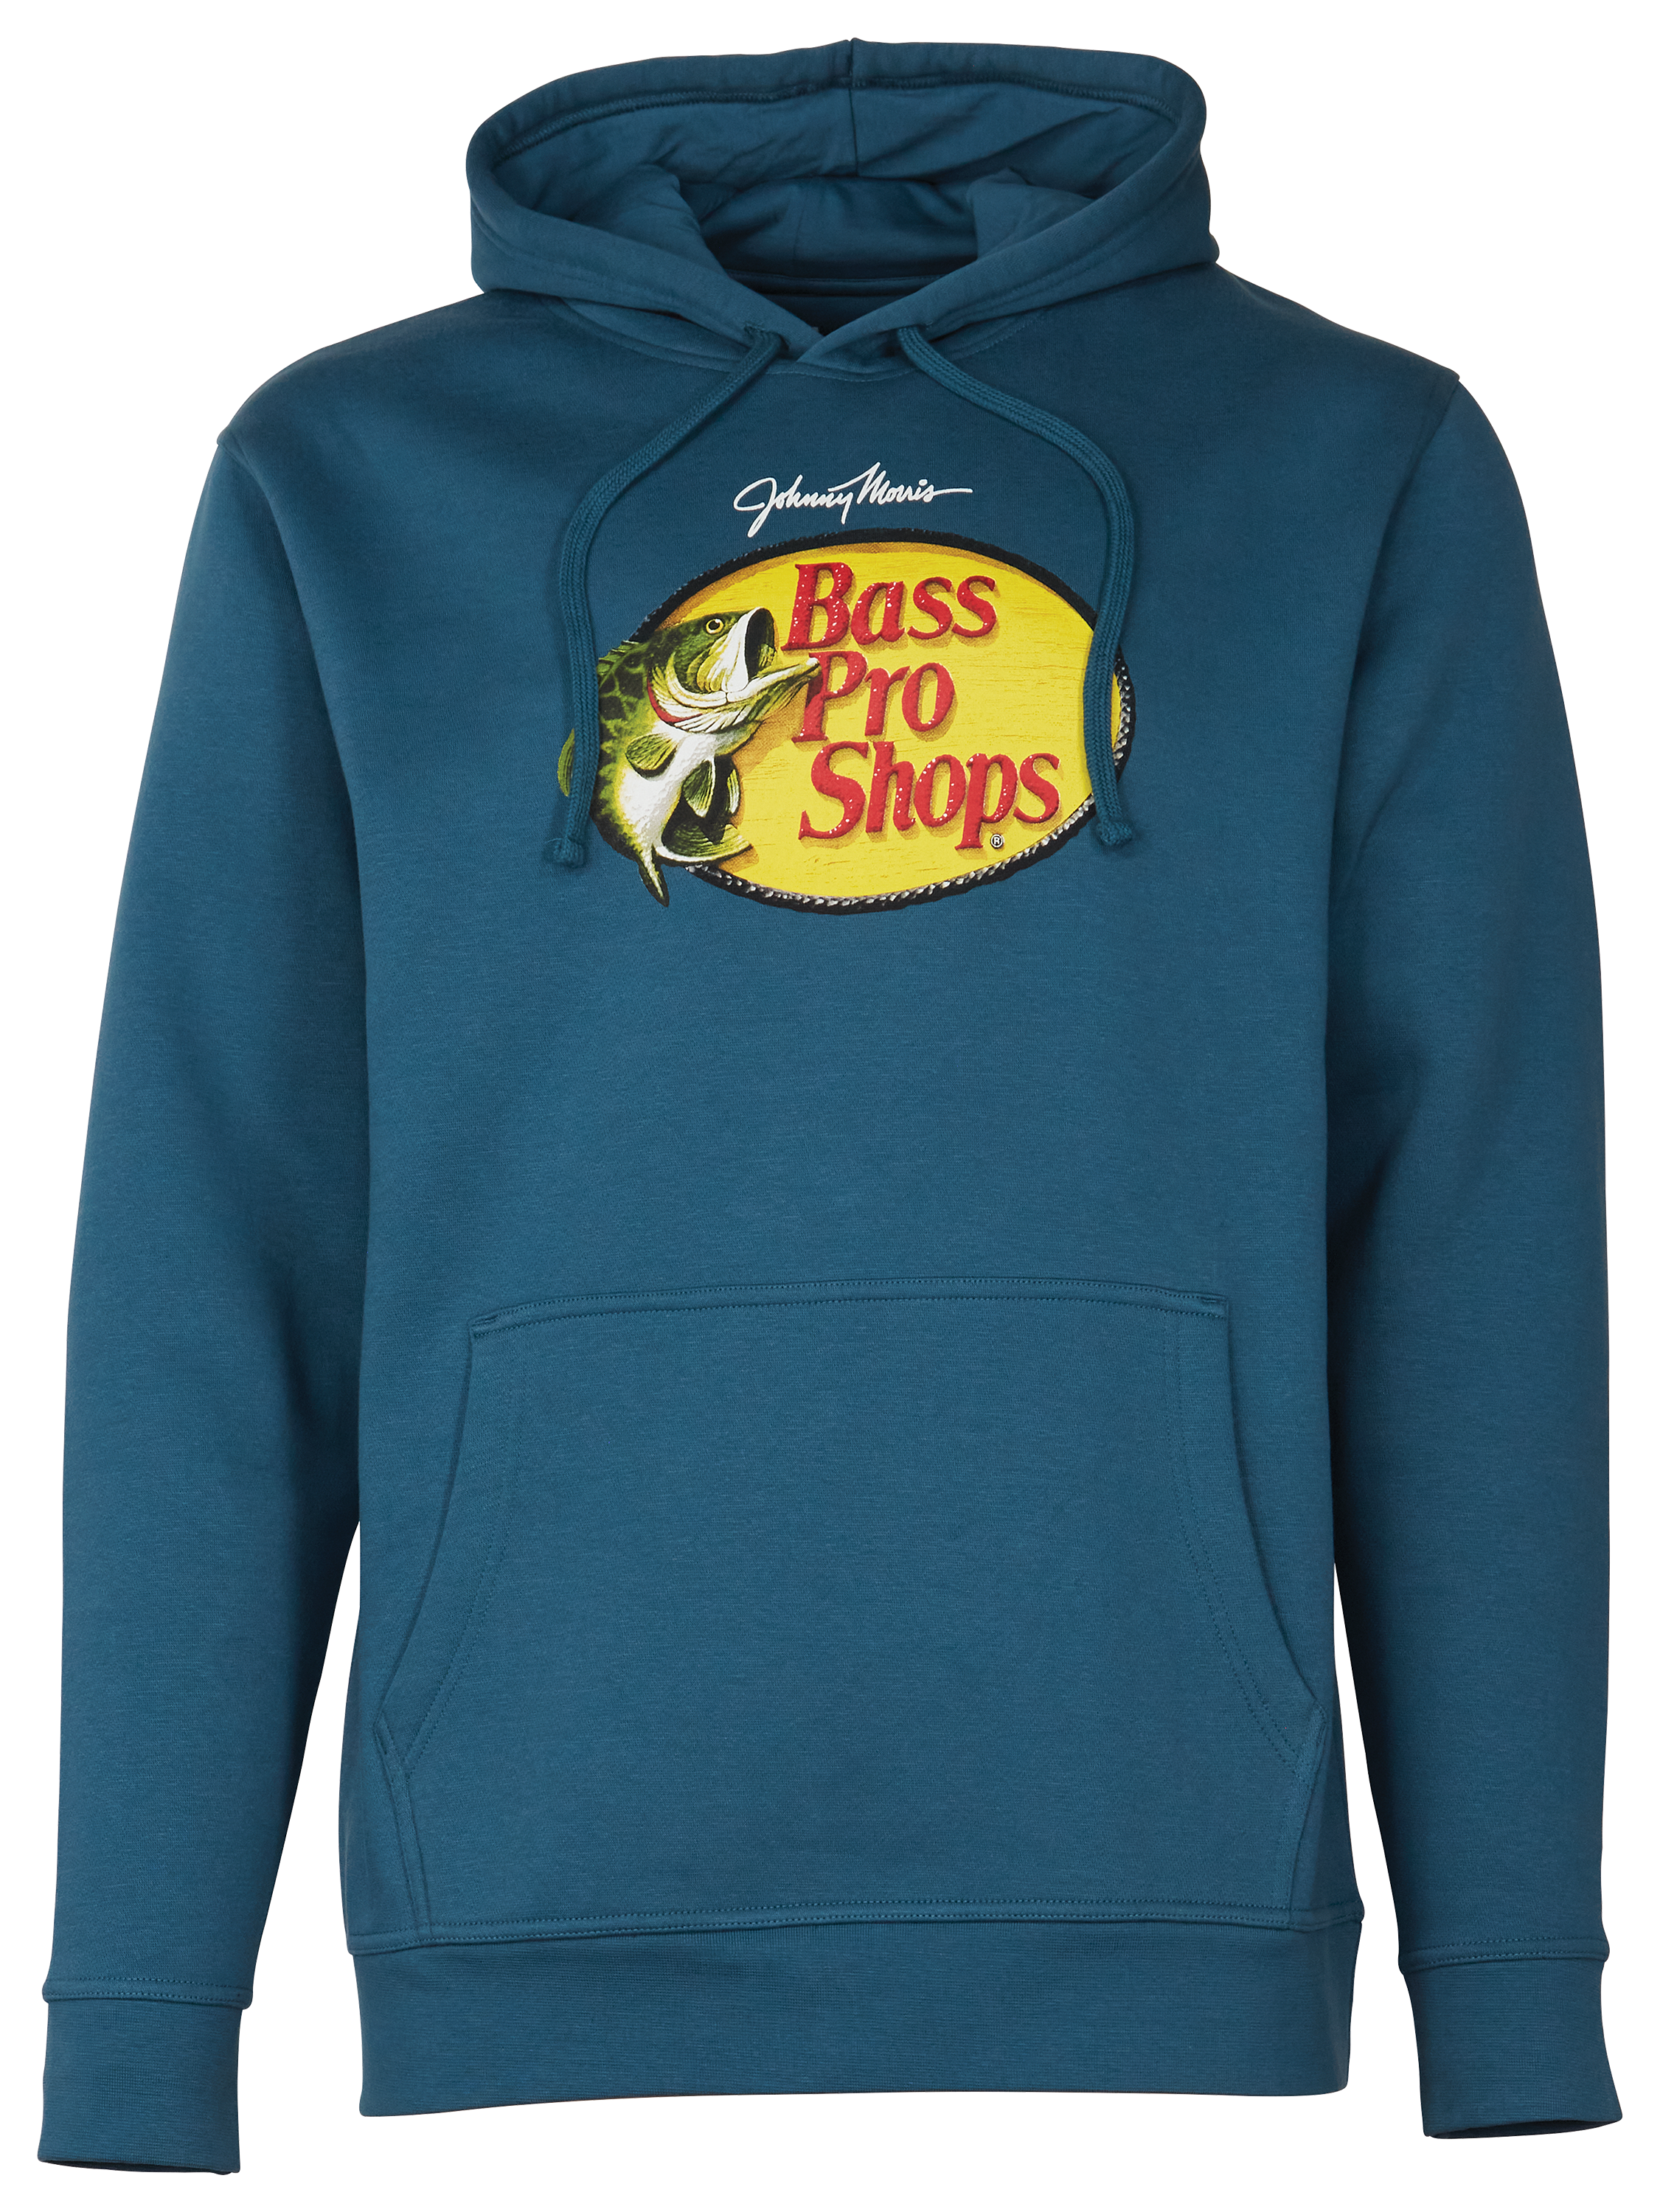 Bass Pro Shops Merry Fishmas Christmas Sweatshirt for Adults